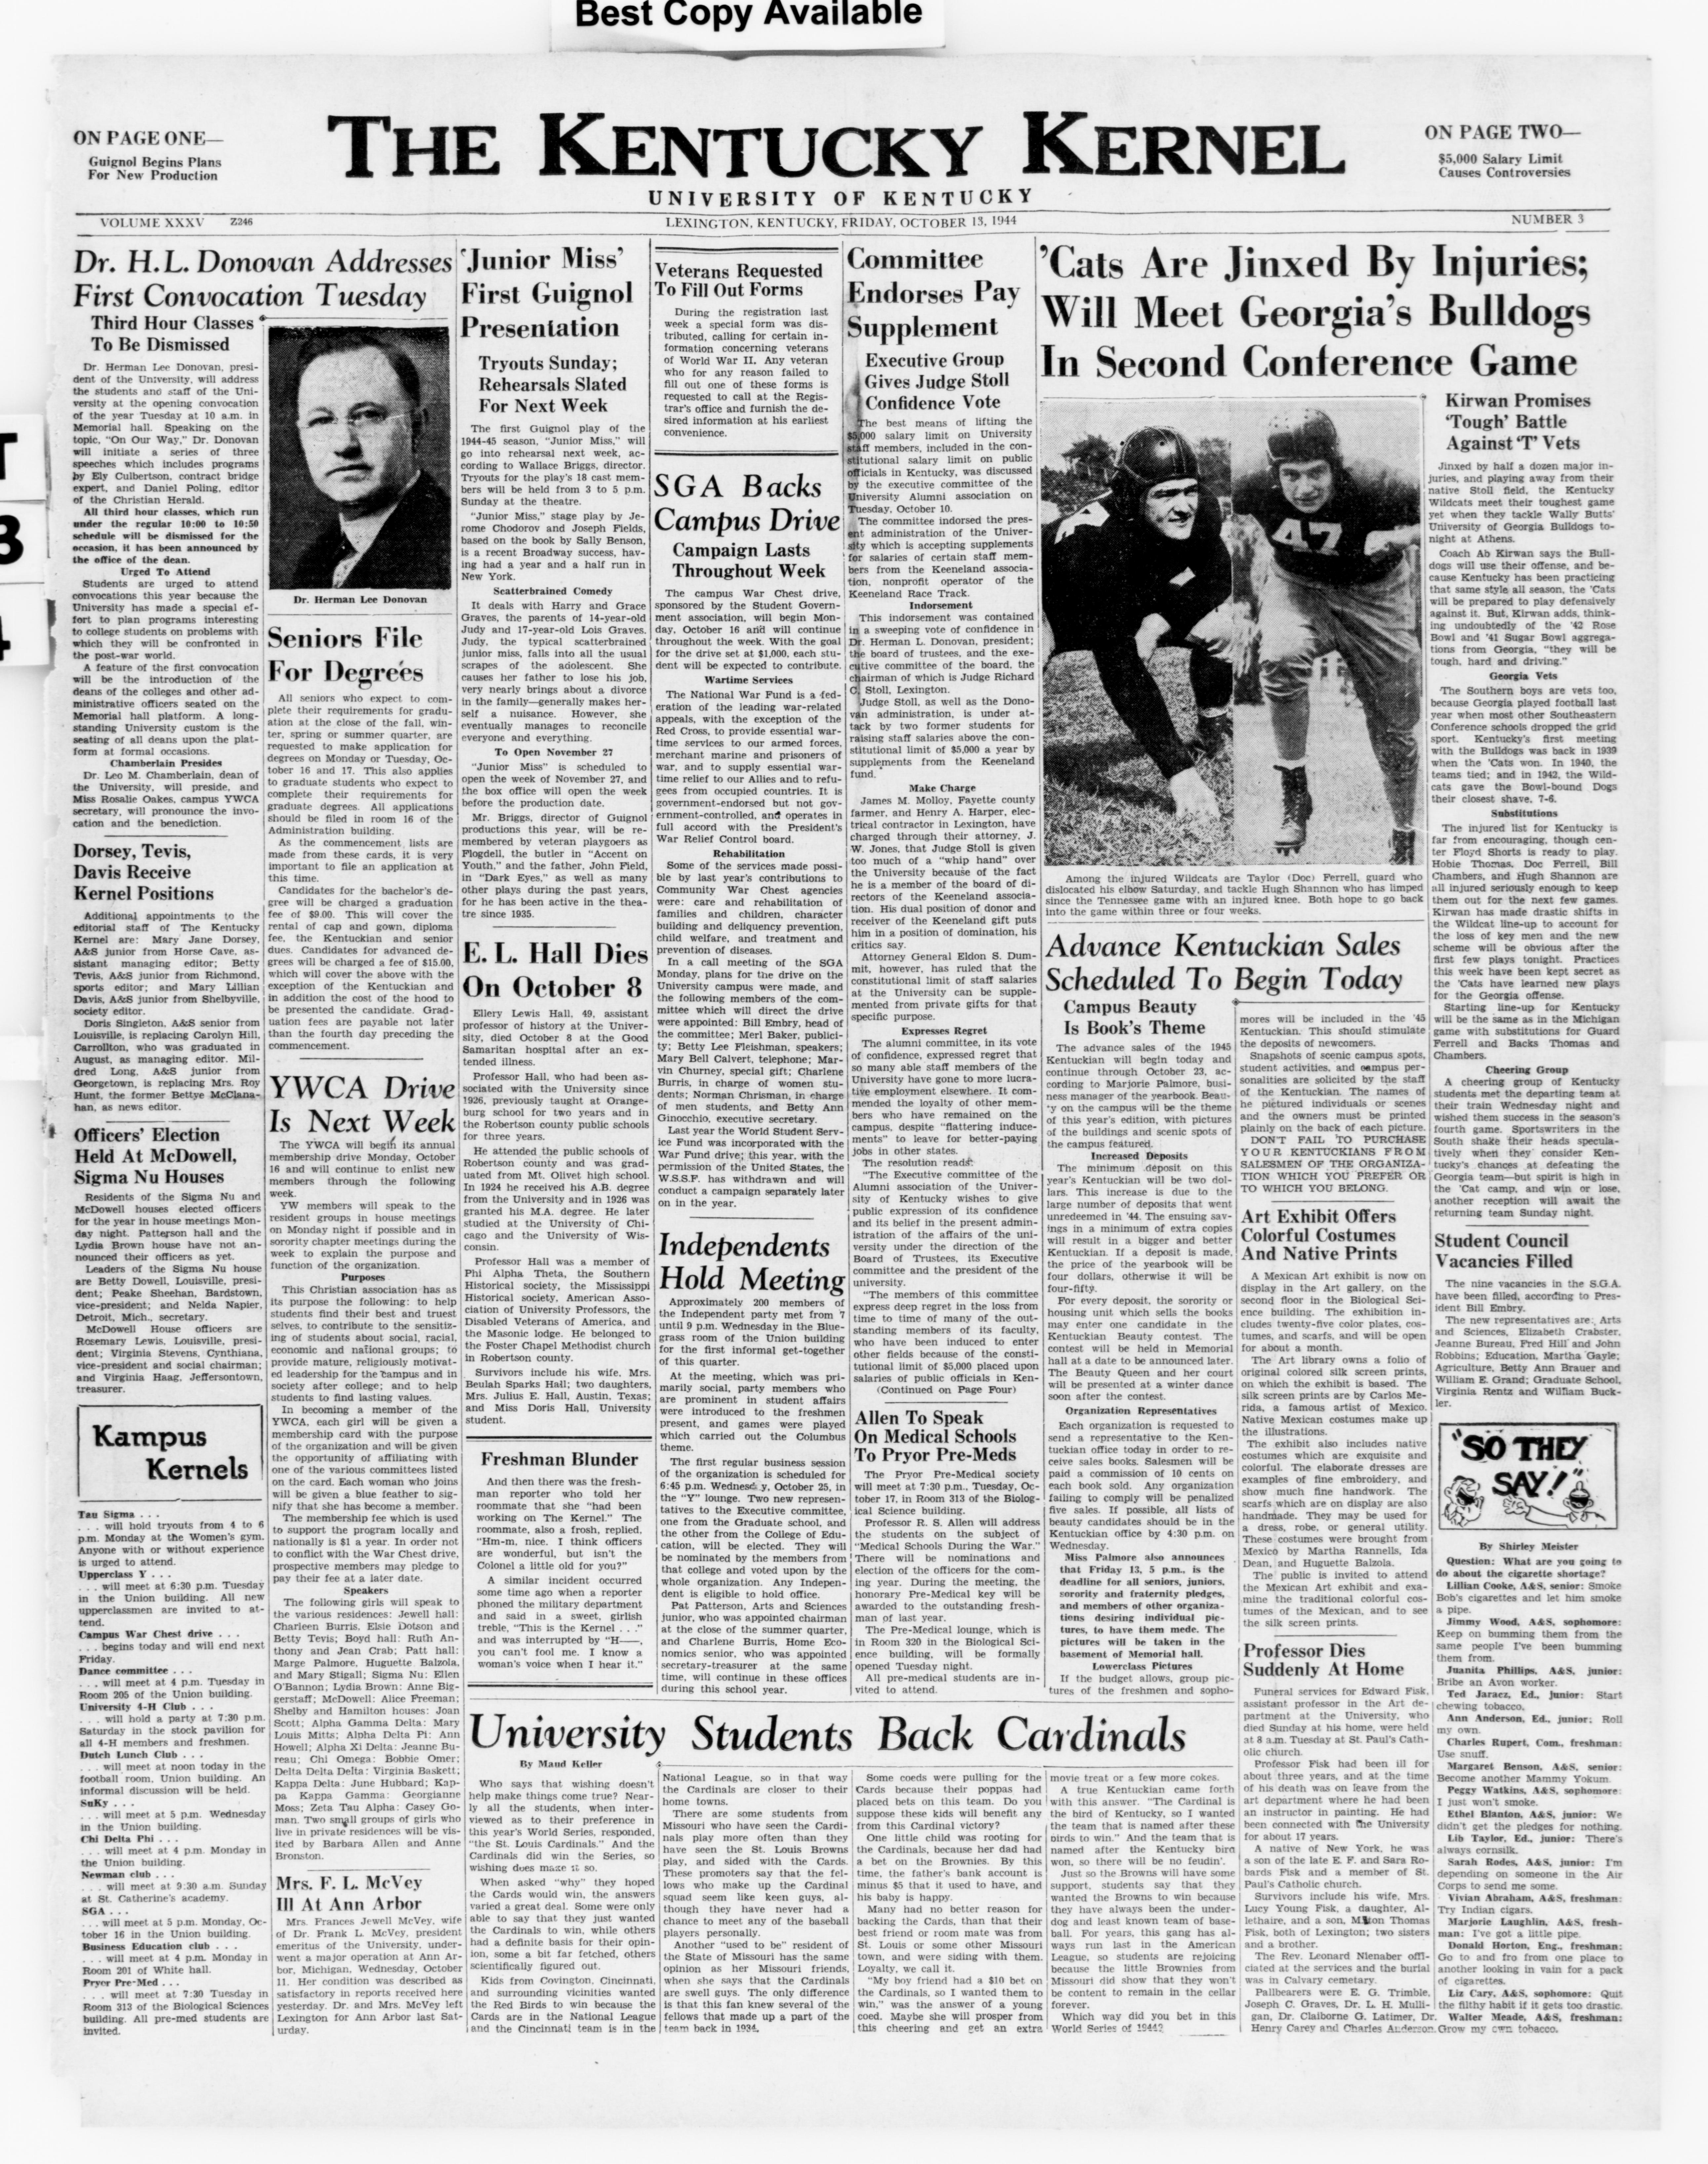 The Kentucky Kernel, October 13, 1944